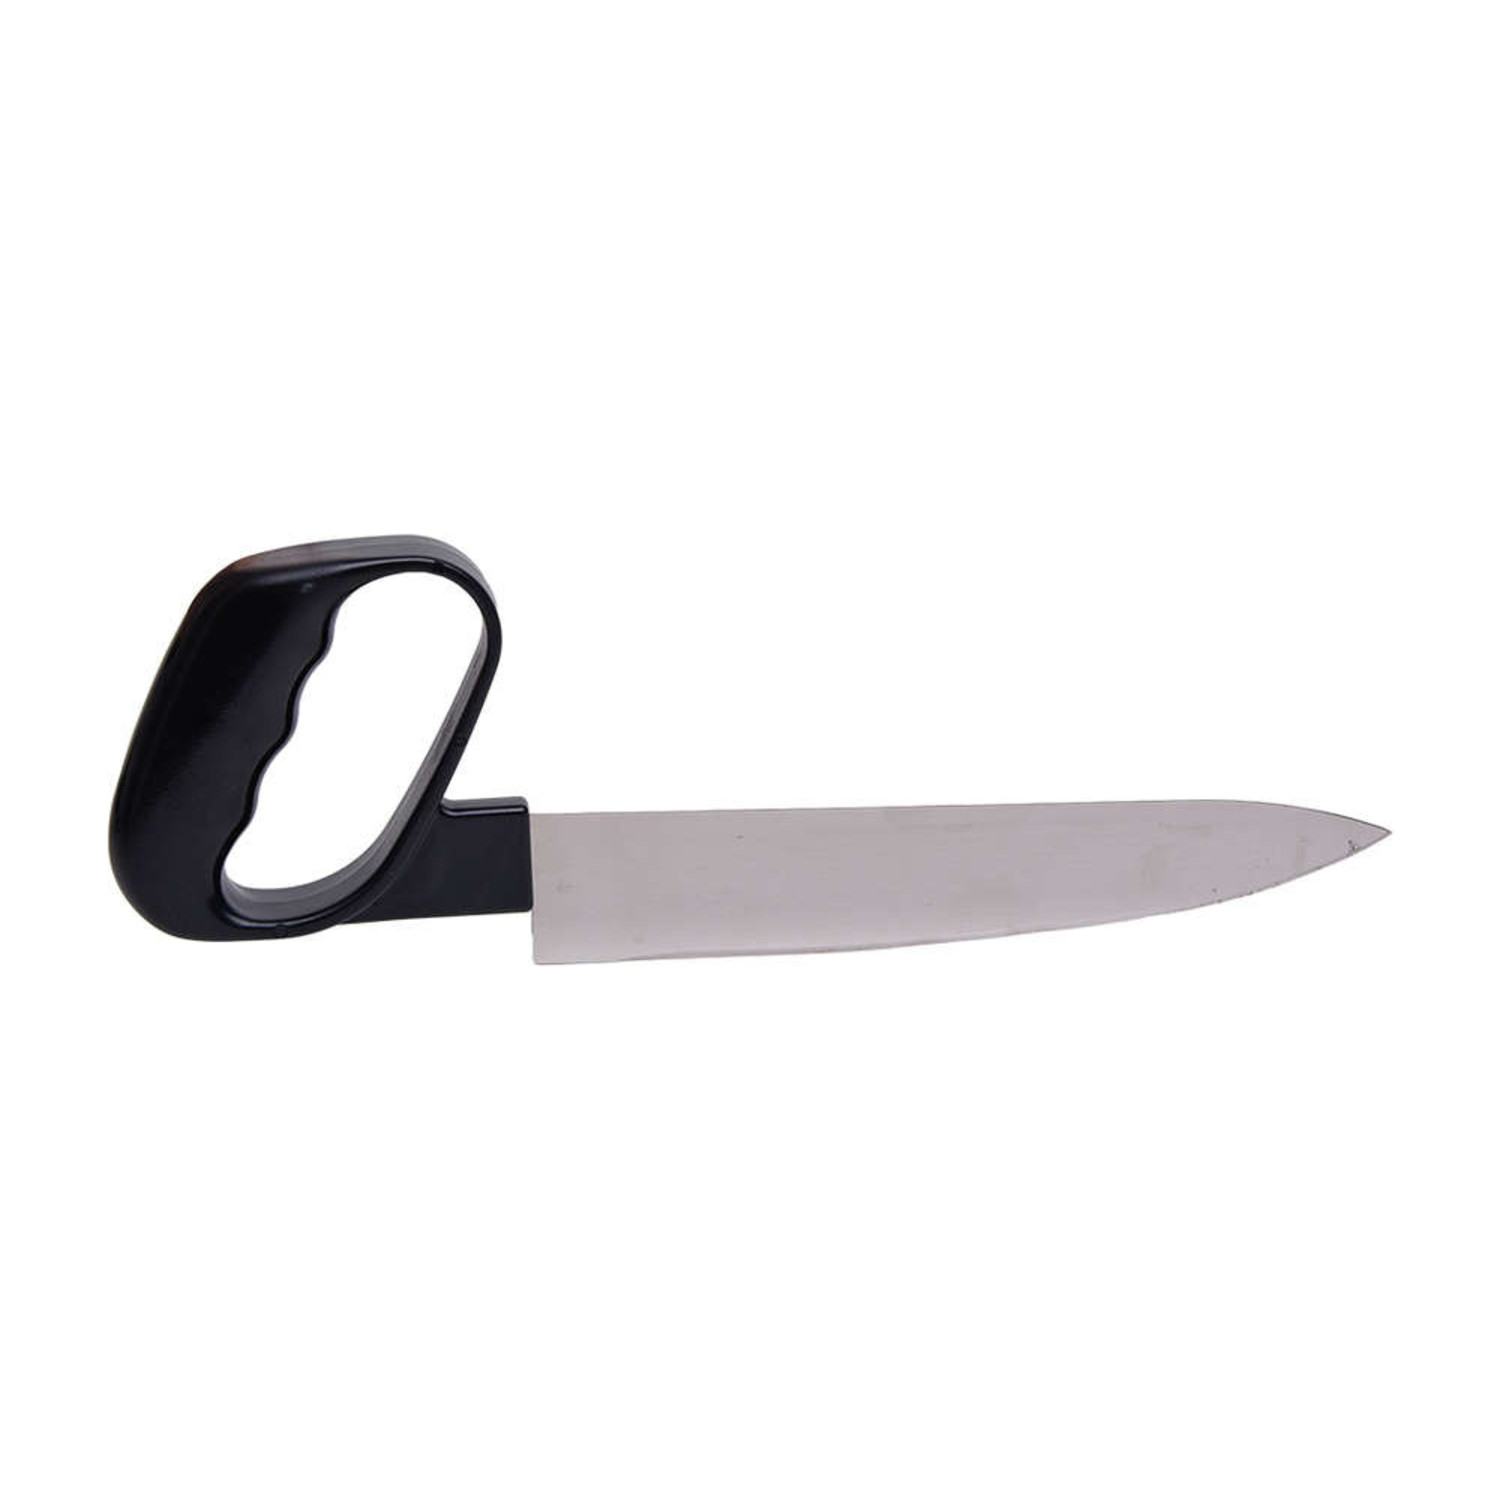 https://cdn.webshopapp.com/shops/231629/files/396862389/1500x1500x2/ergonomic-kitchen-knife-with-round-handle-2-varian.jpg